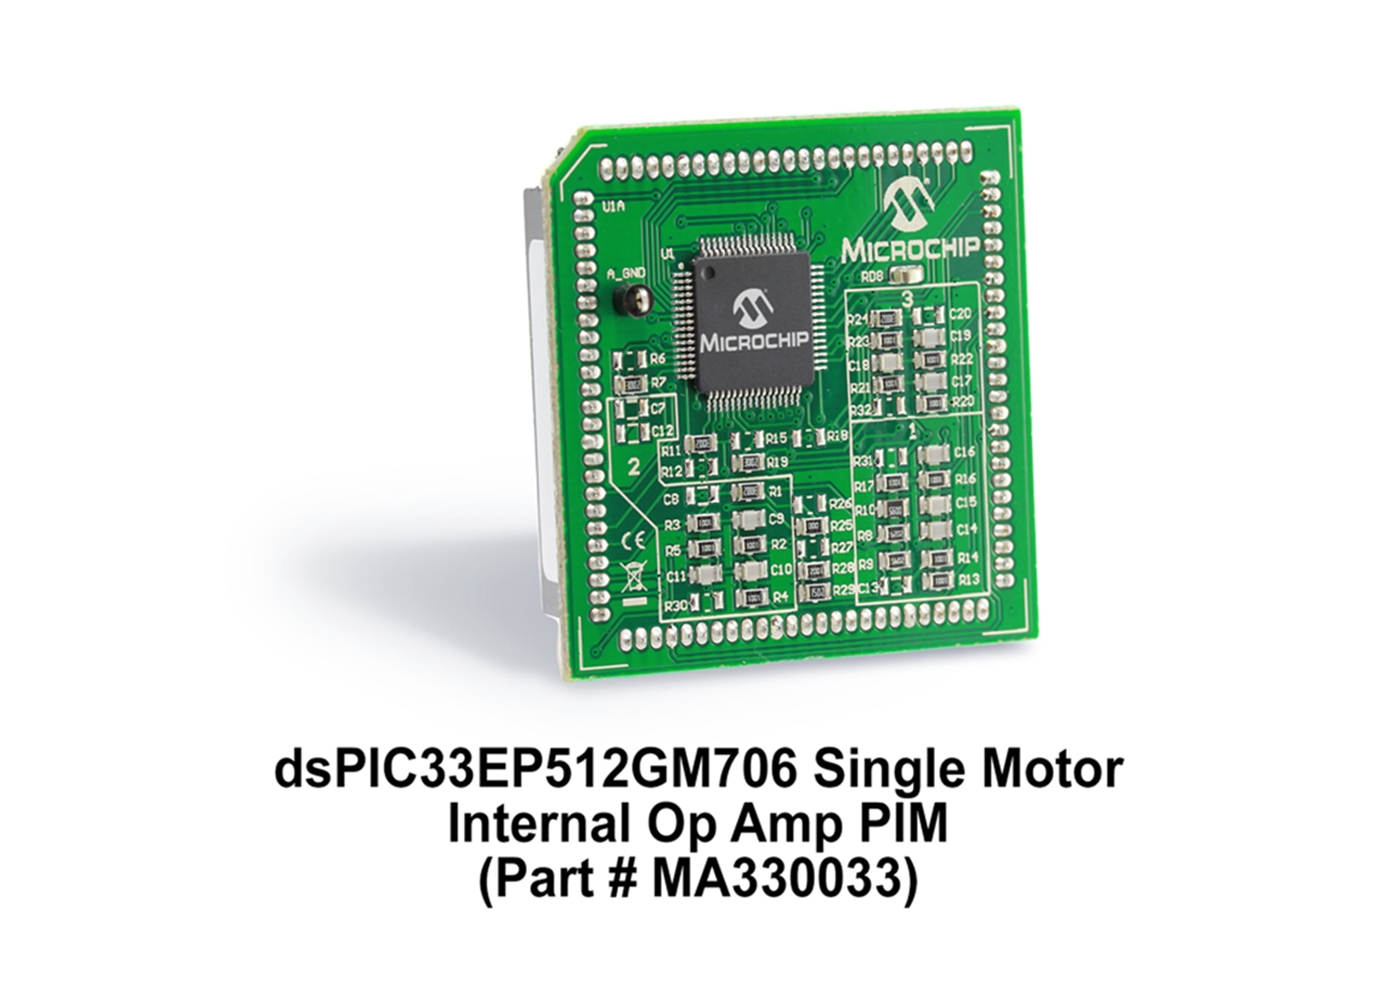 MA330033_dsPIC33EP512GM706 Single Motor Internal Op Amp PIM_Angle_7x5.jpg